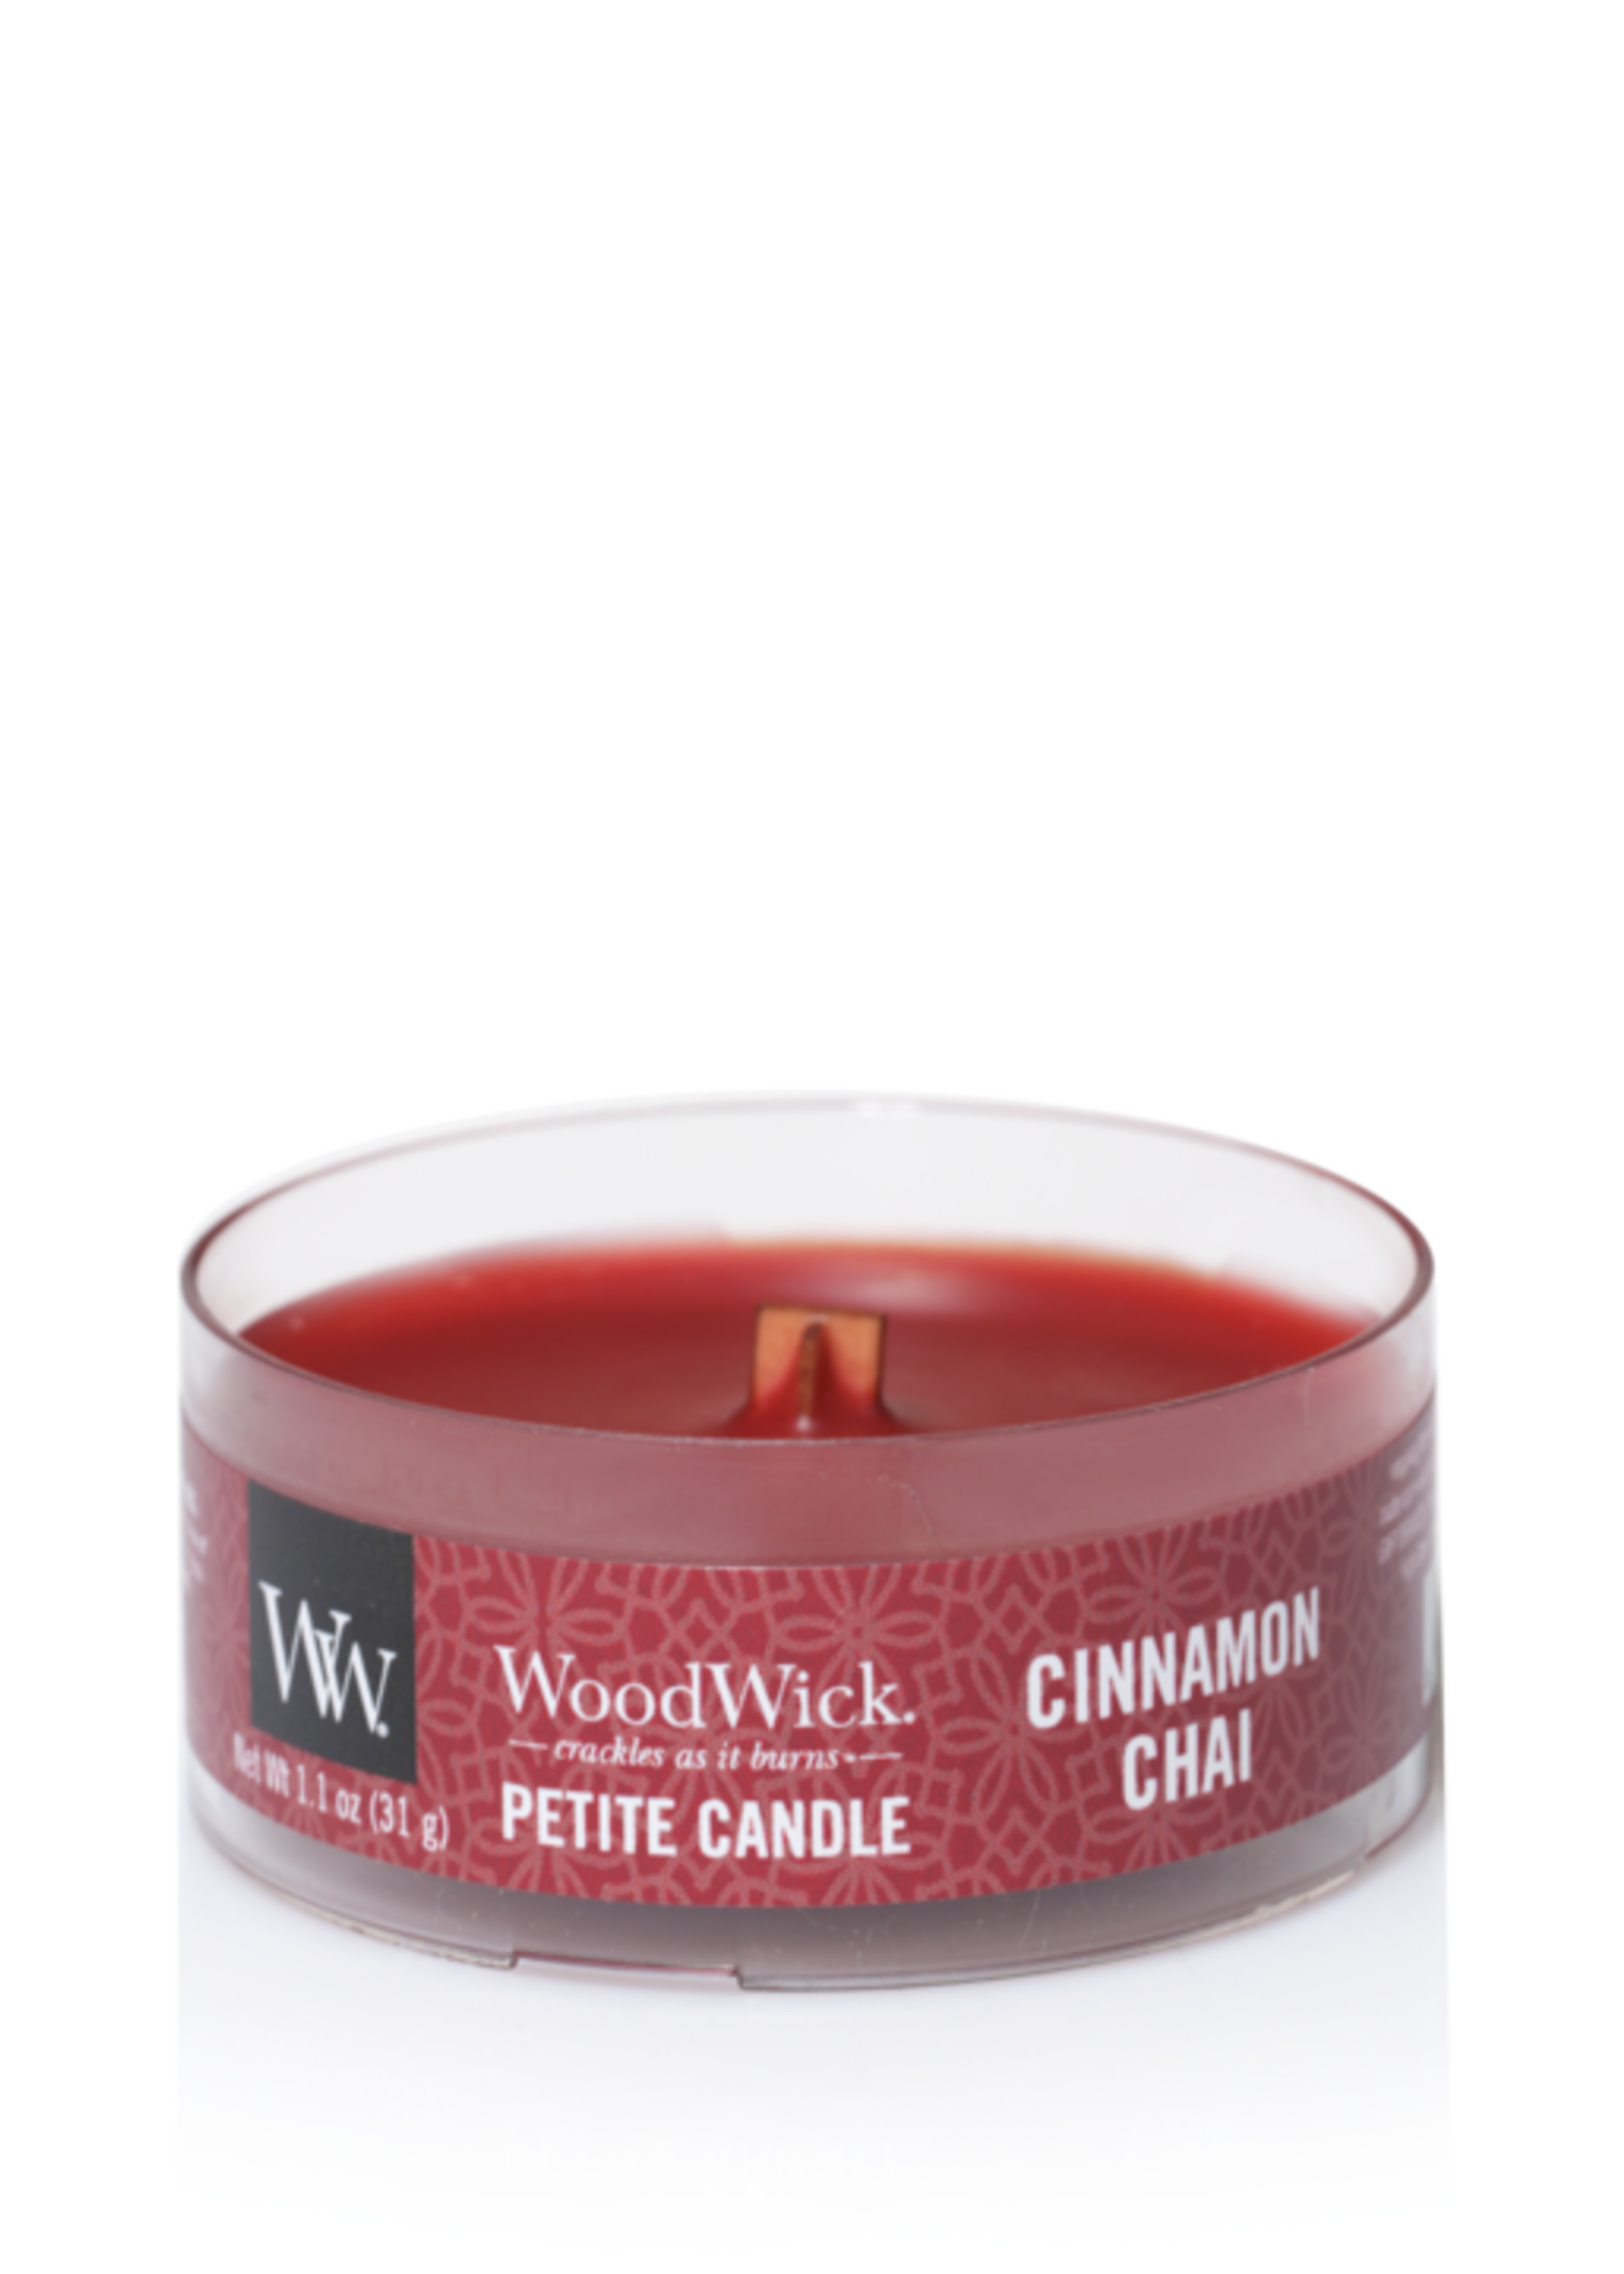 Woodwick Cinnamon chai petite candle